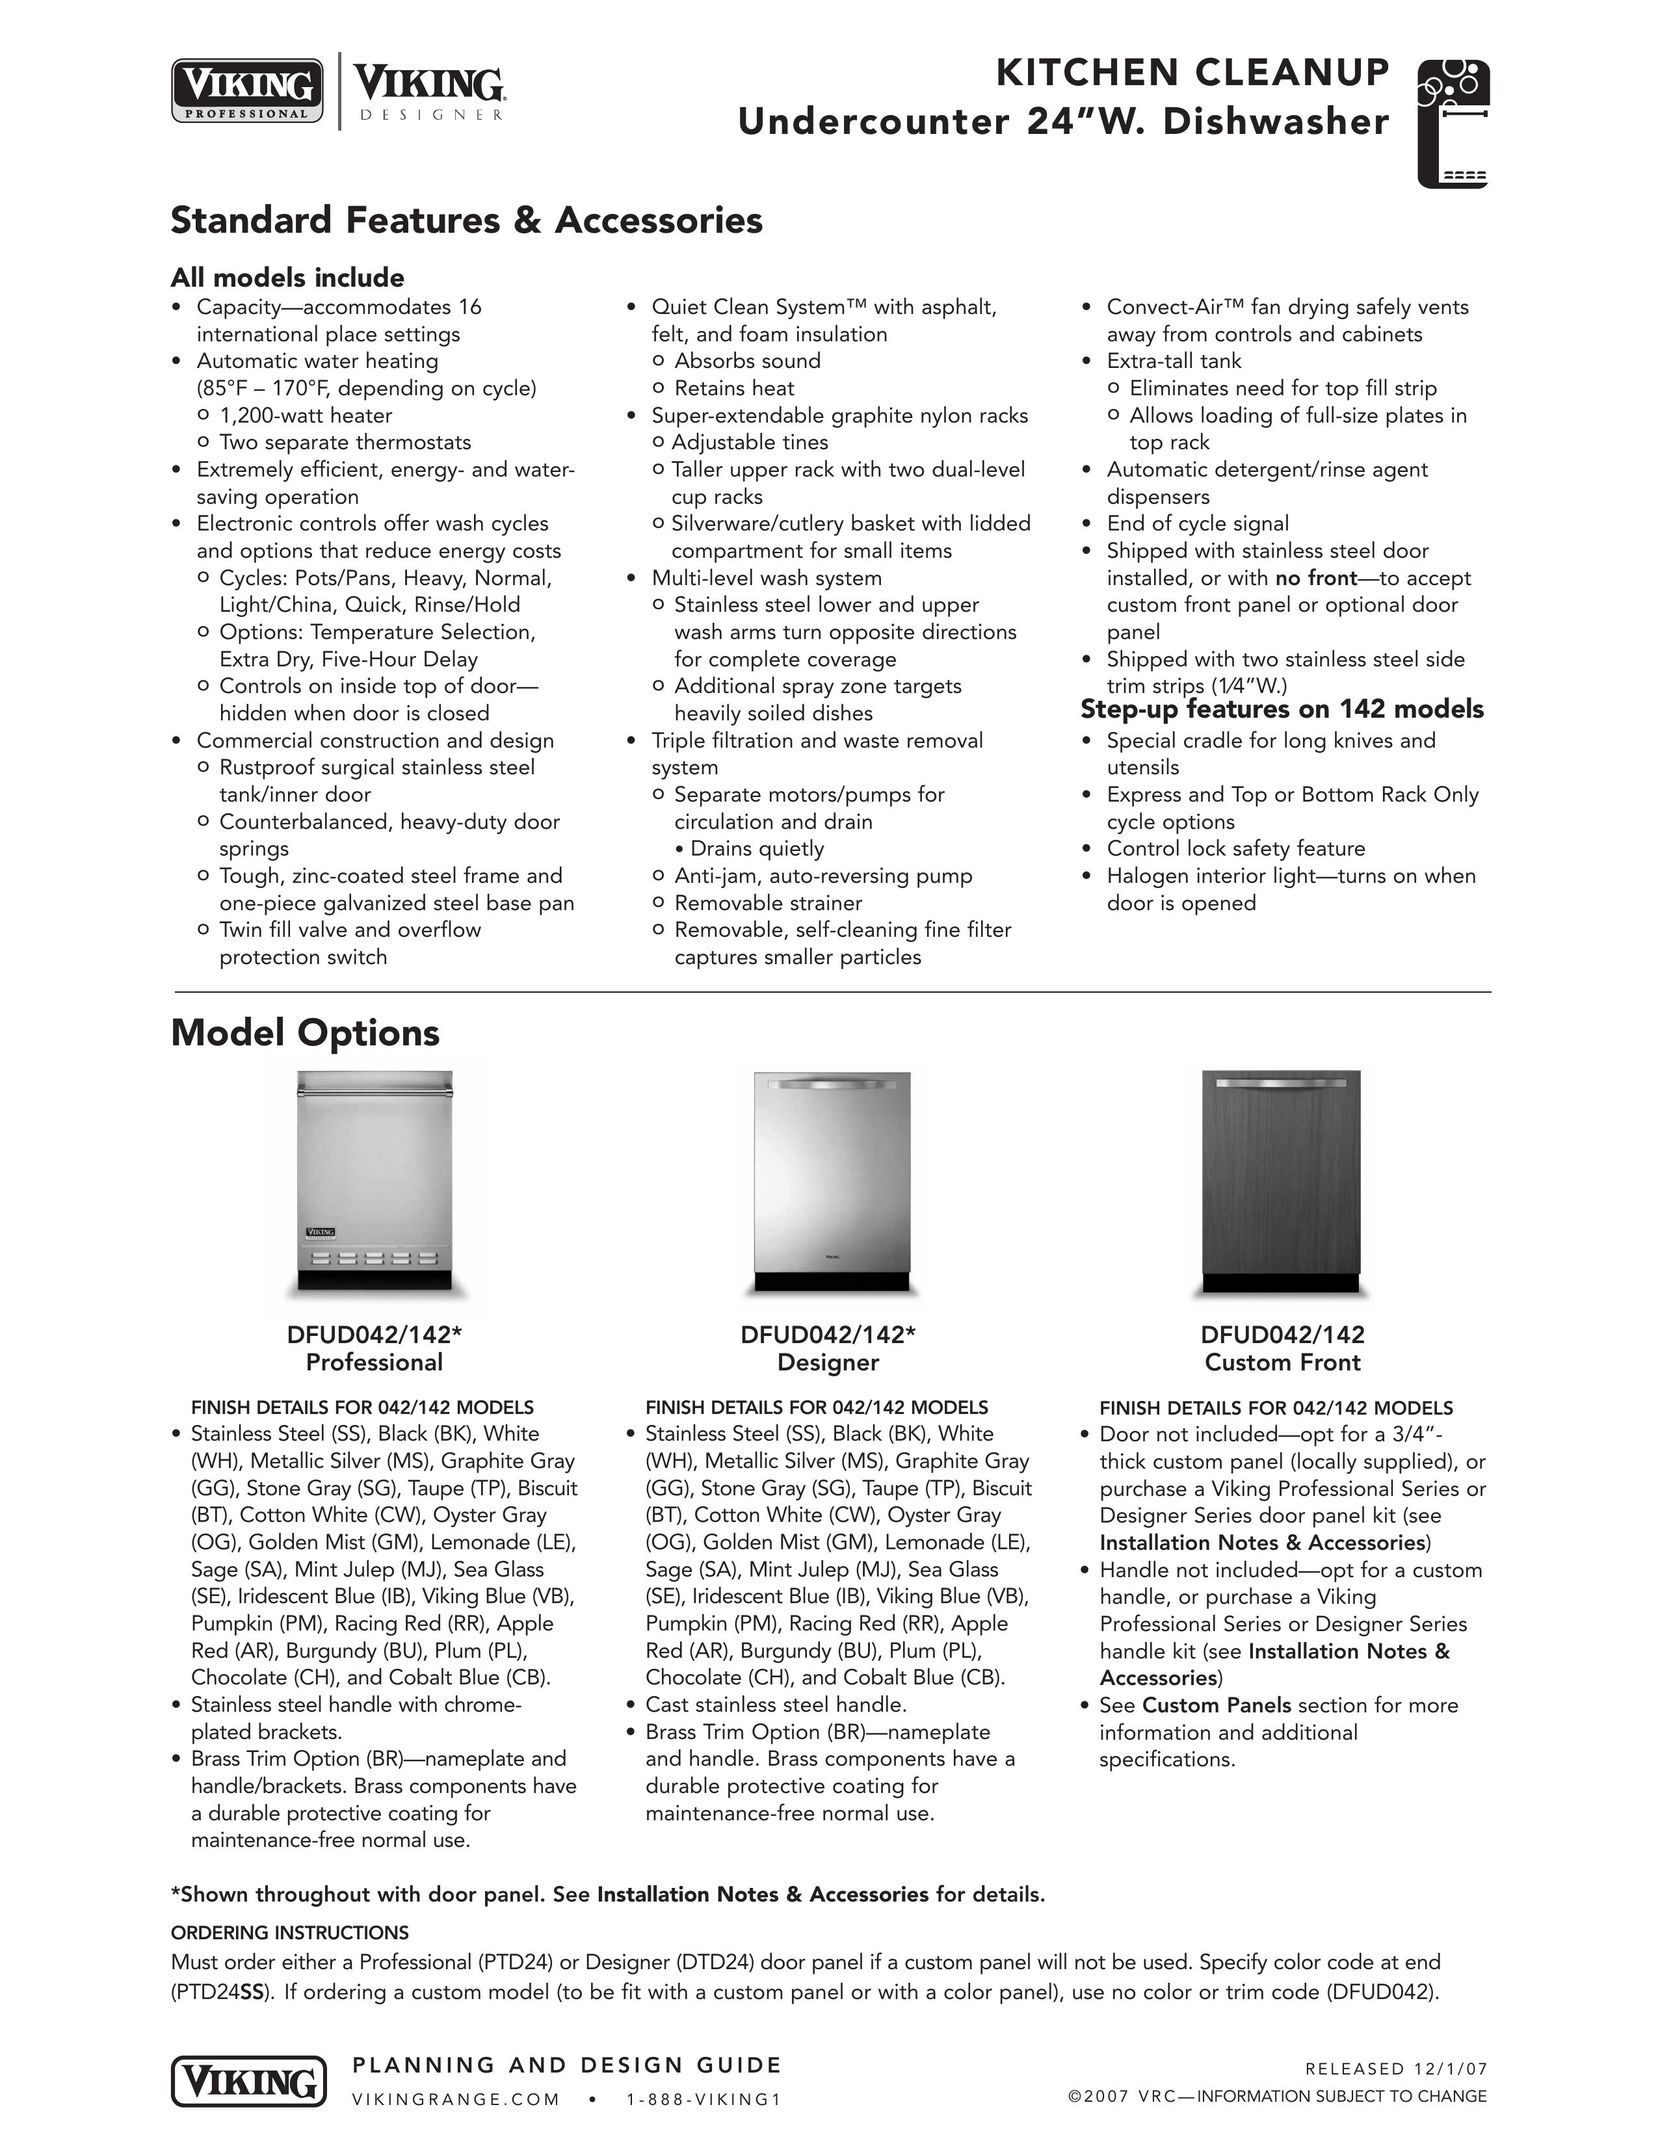 Viking DFUD042/142 Custom Front Dishwasher User Manual